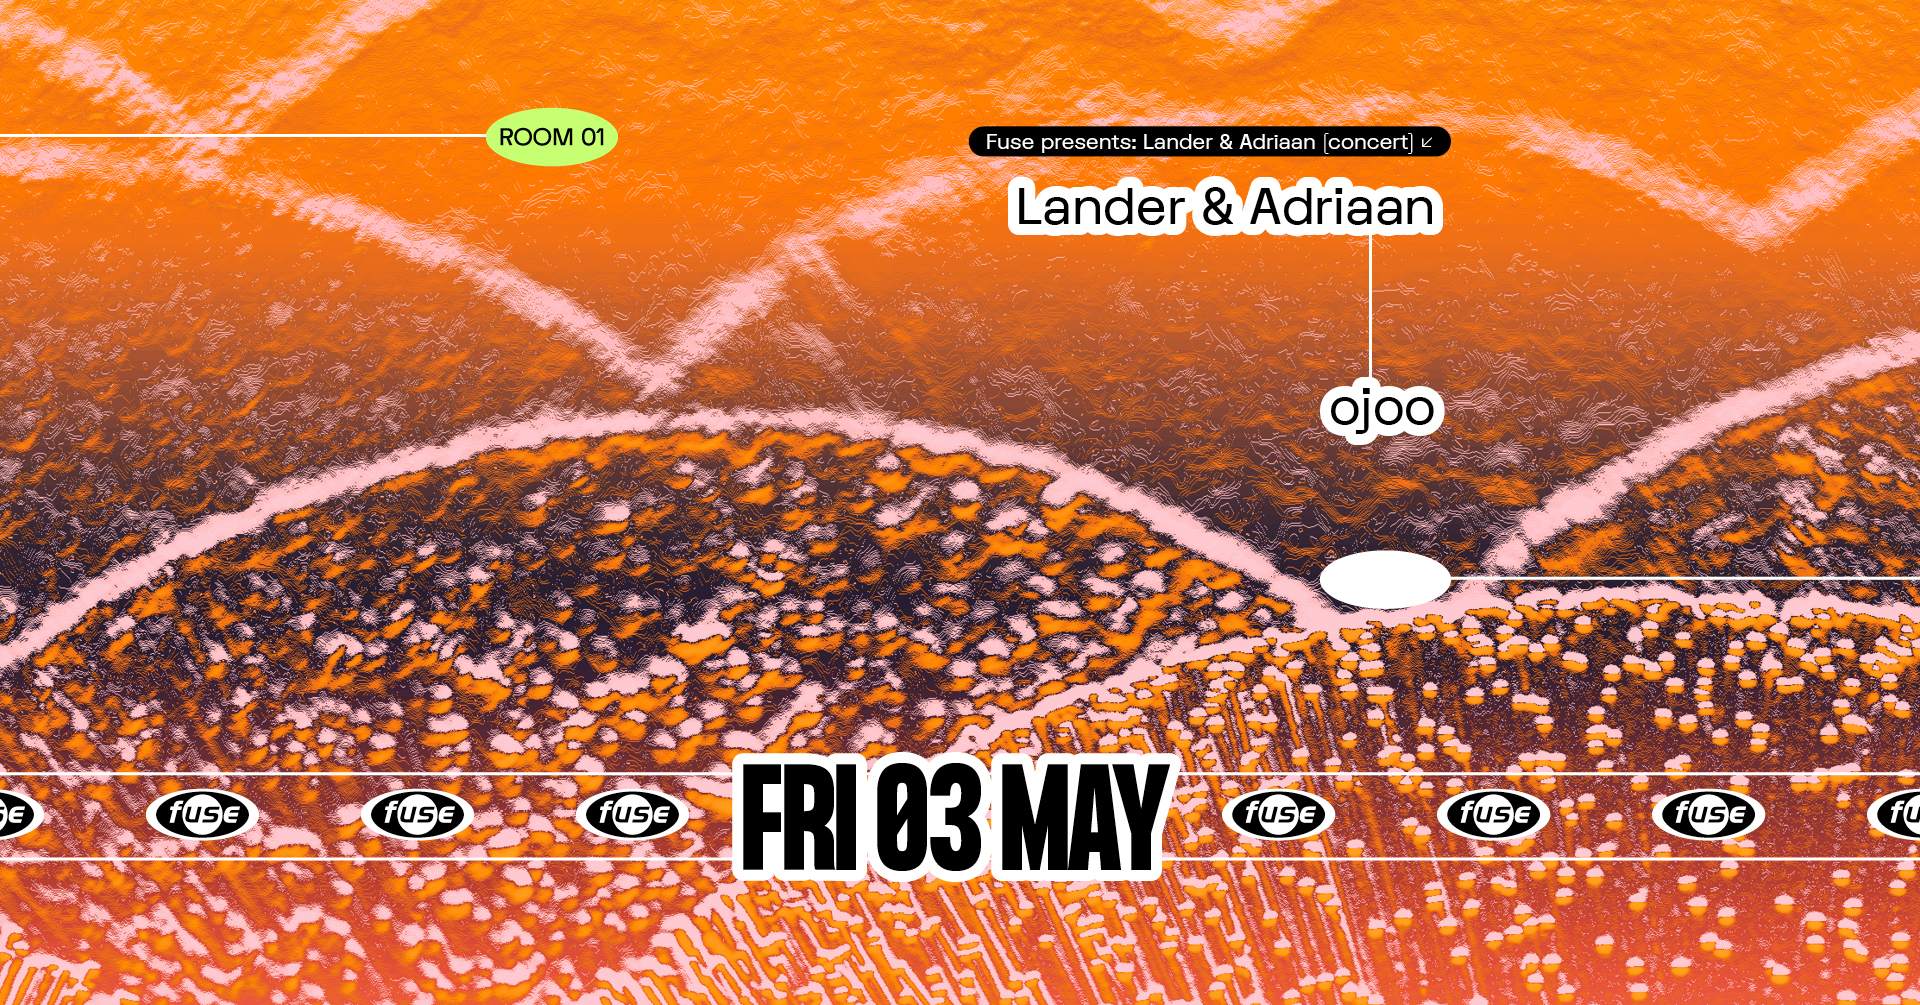 Fuse presents: Lander & Adriaan (concert) - フライヤー表